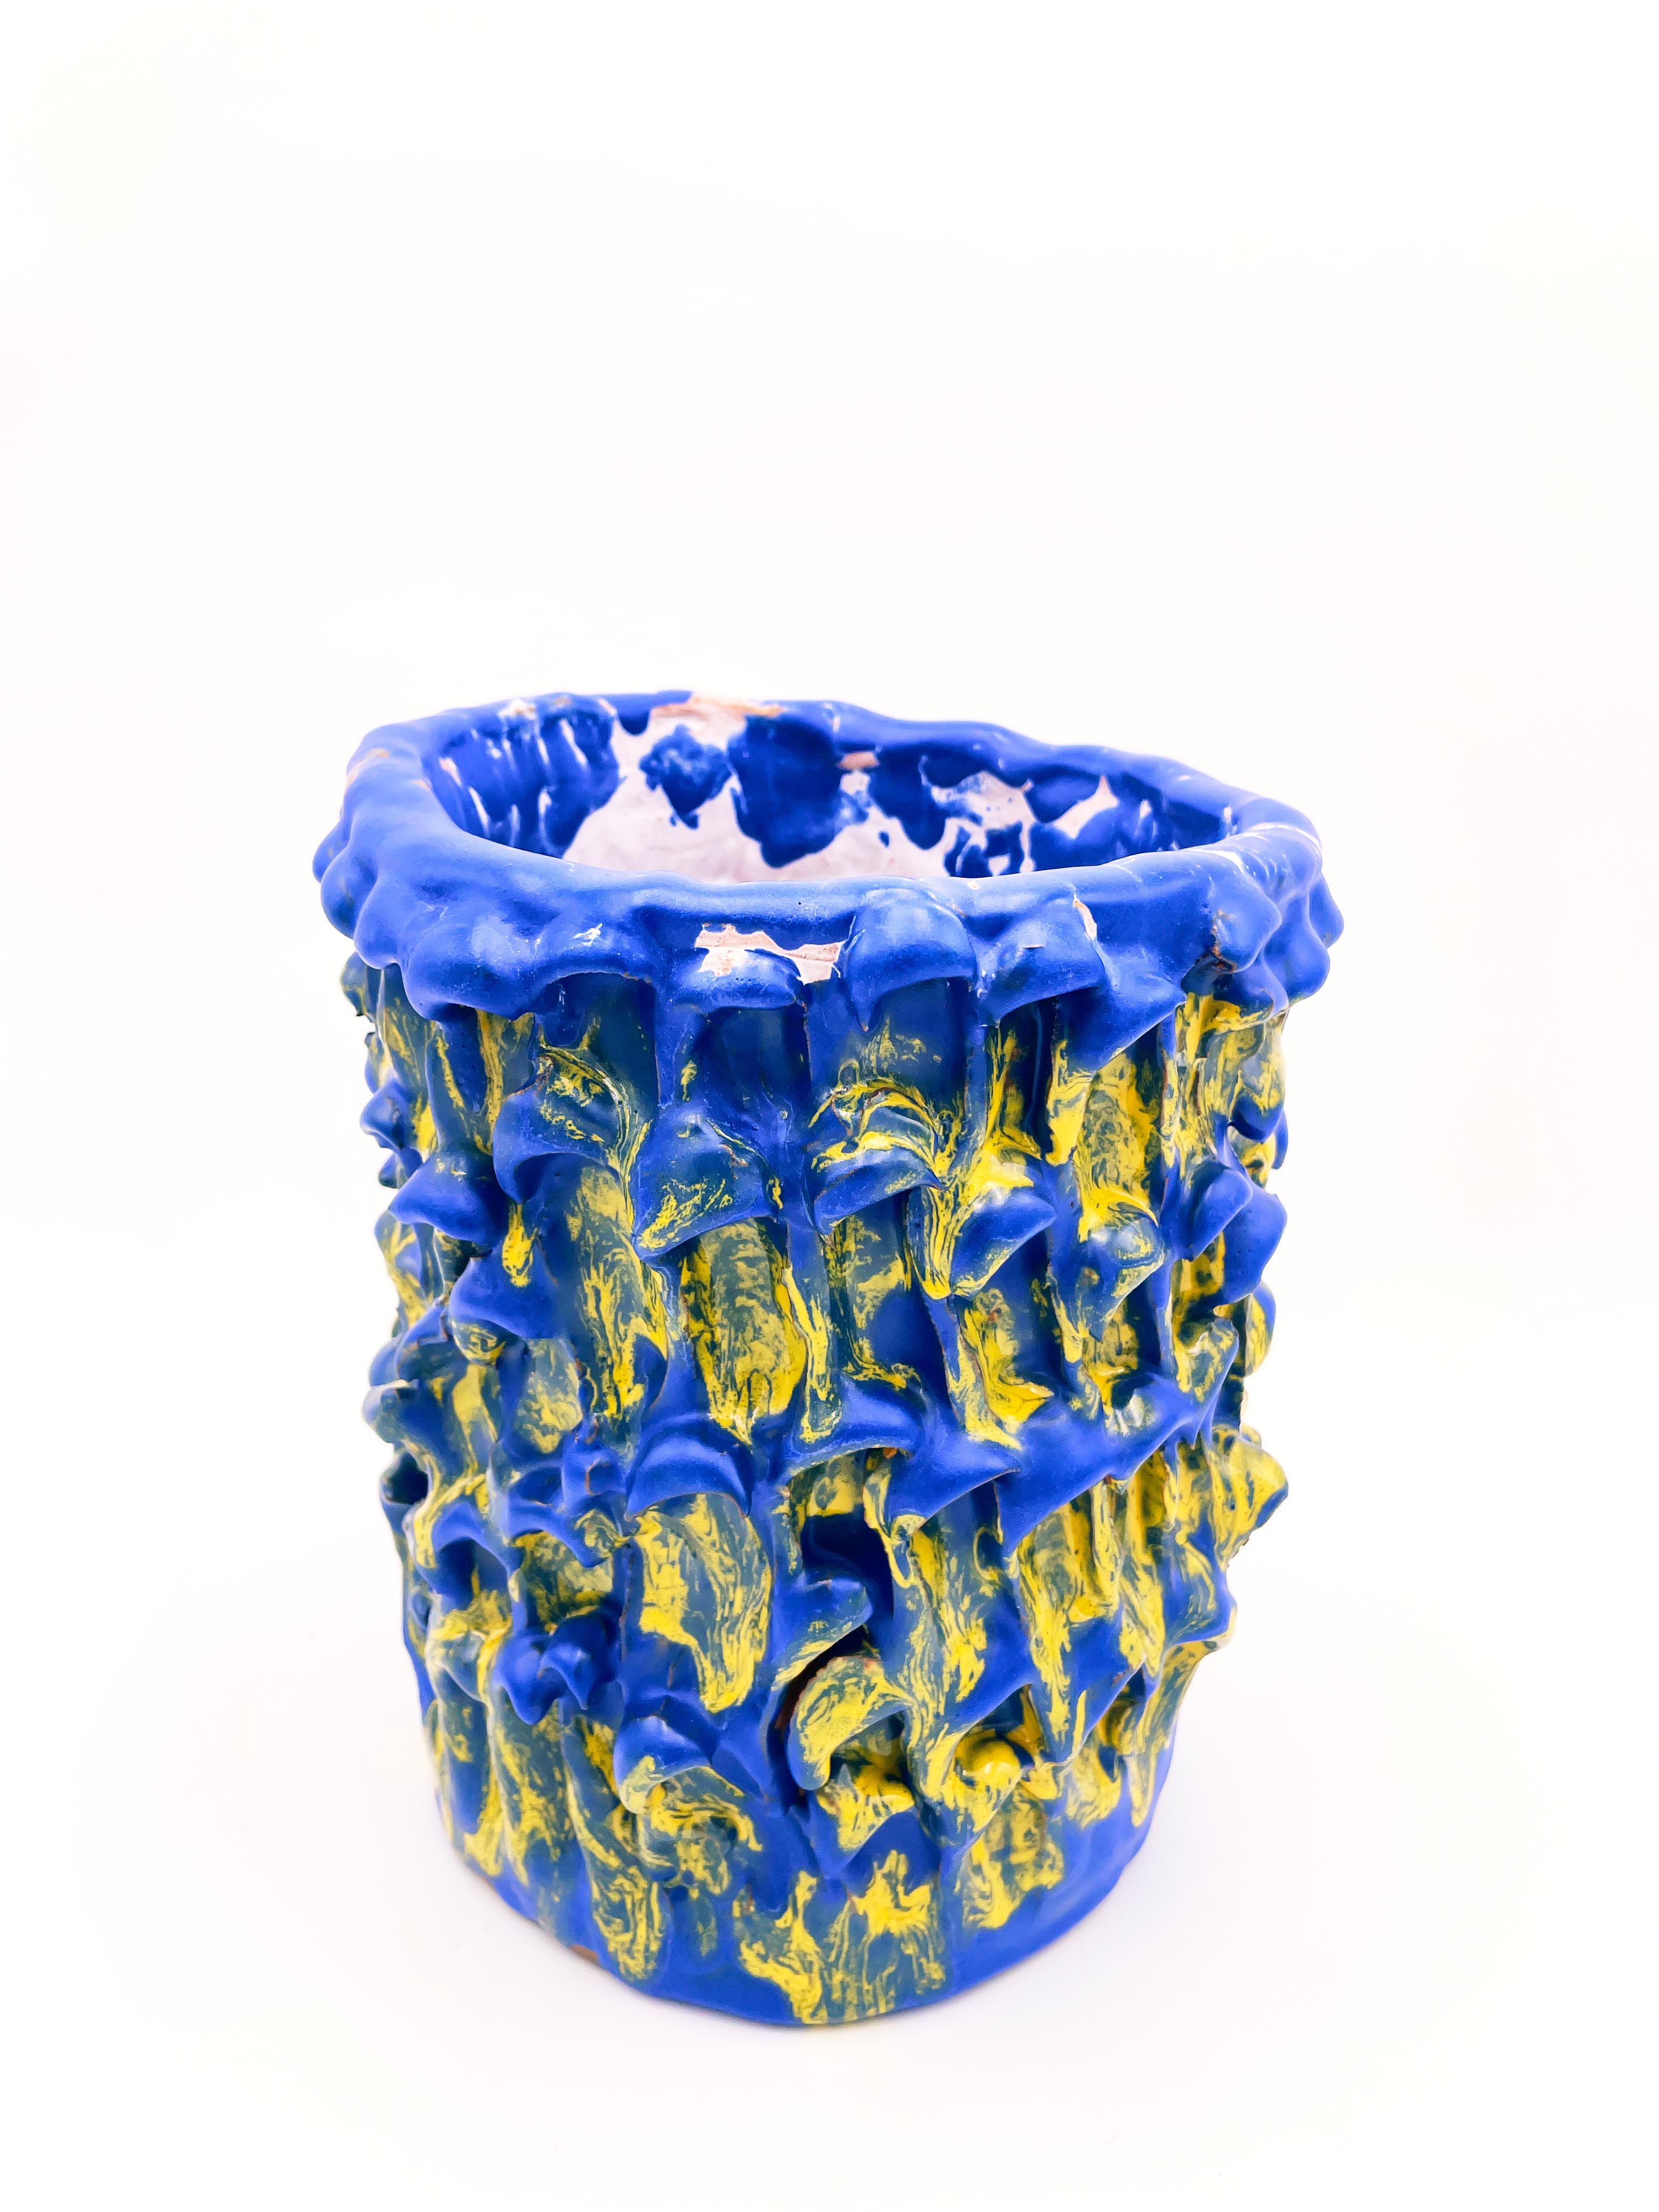 Organic Modern Onda Vase, Egyptian Blue and Sunflower Yellow For Sale